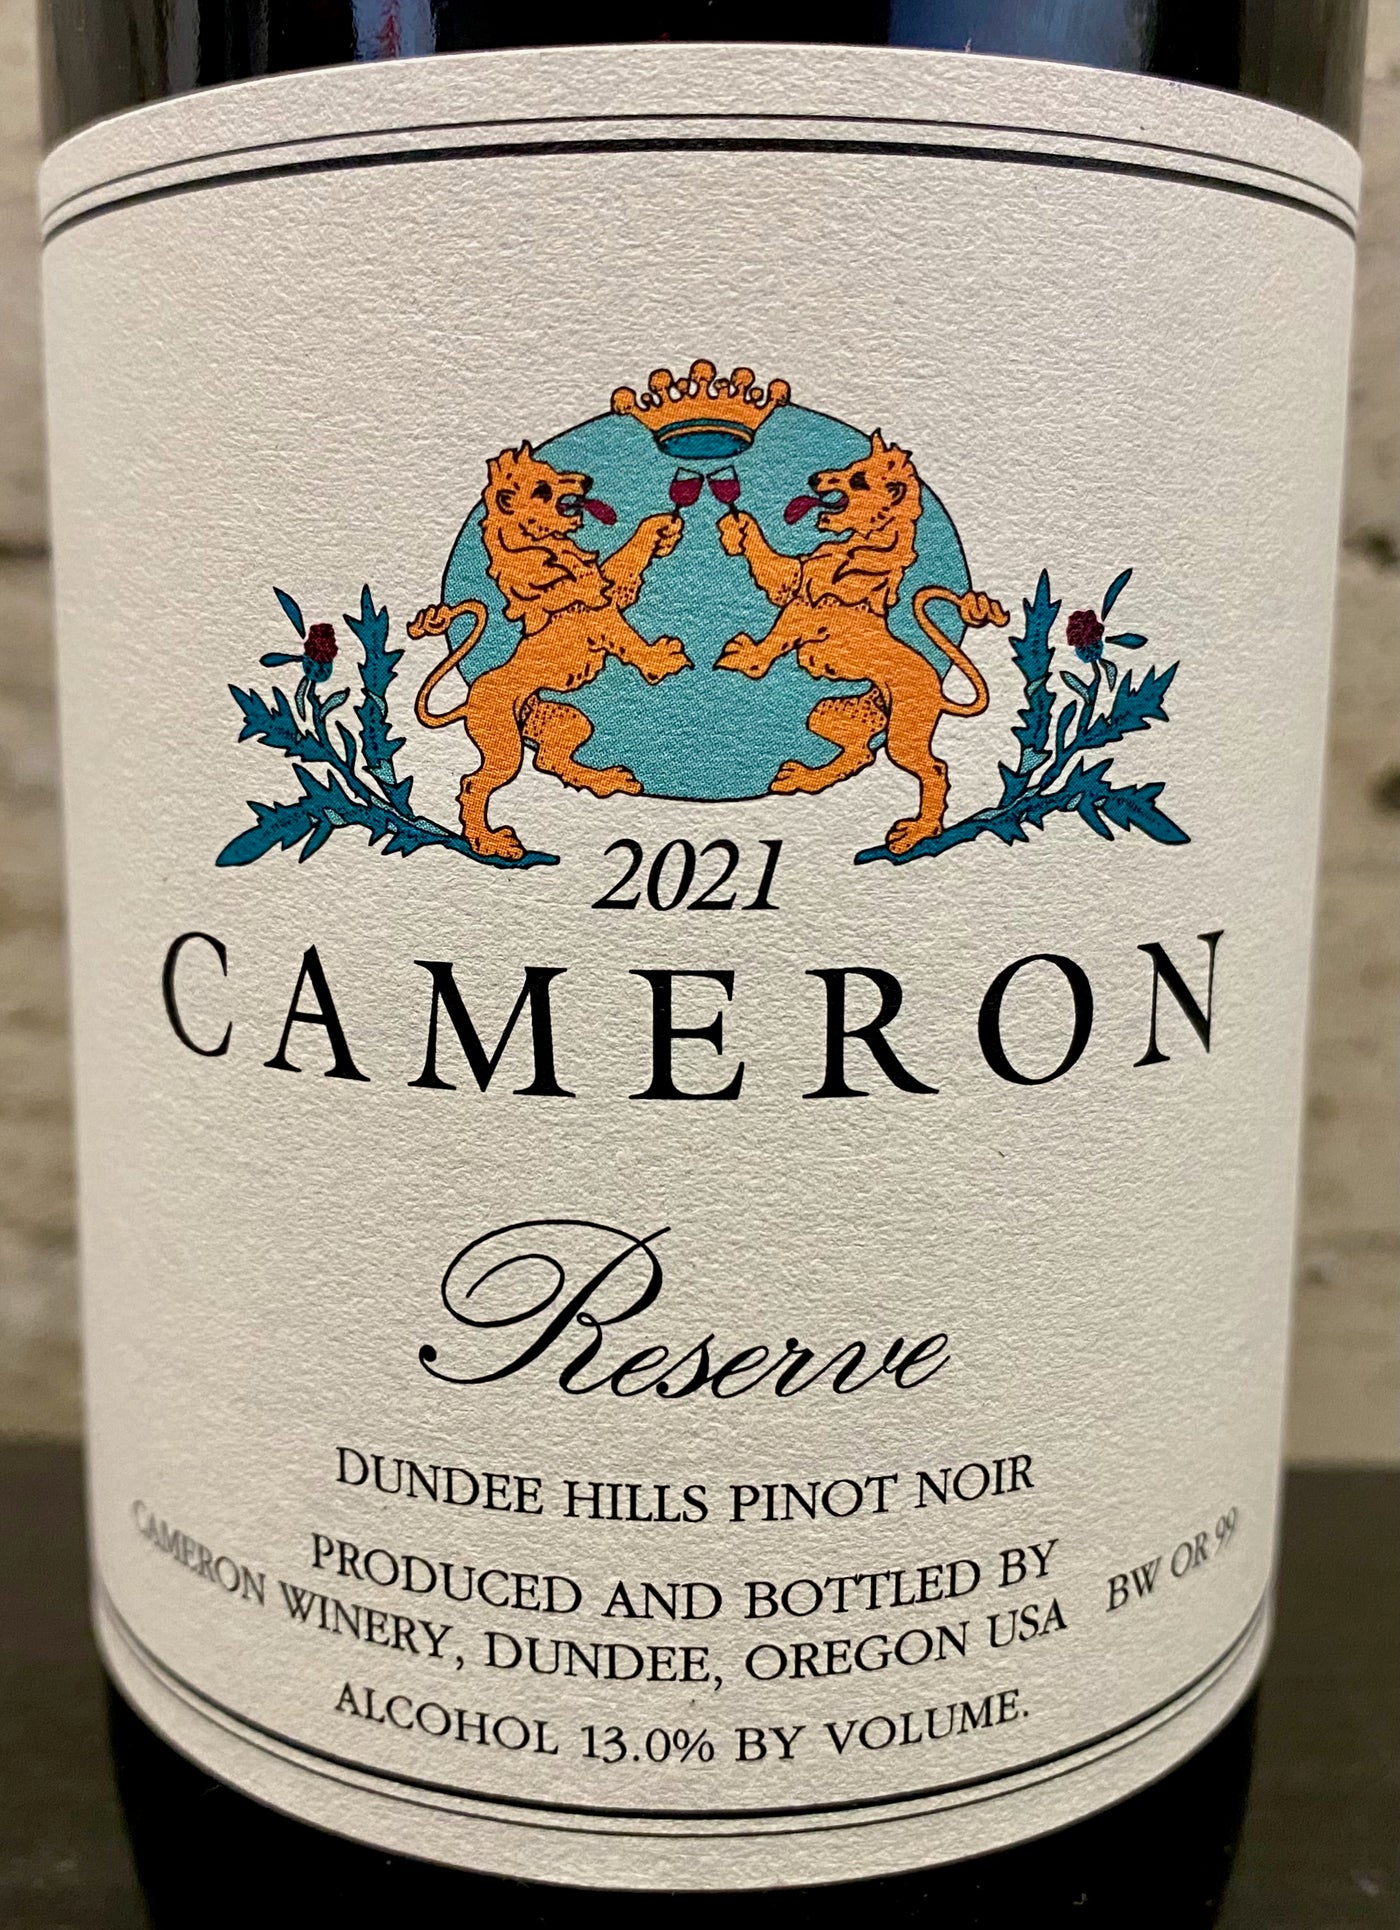 Cameron Reserve Dundee Hills Pinot Noir 2021